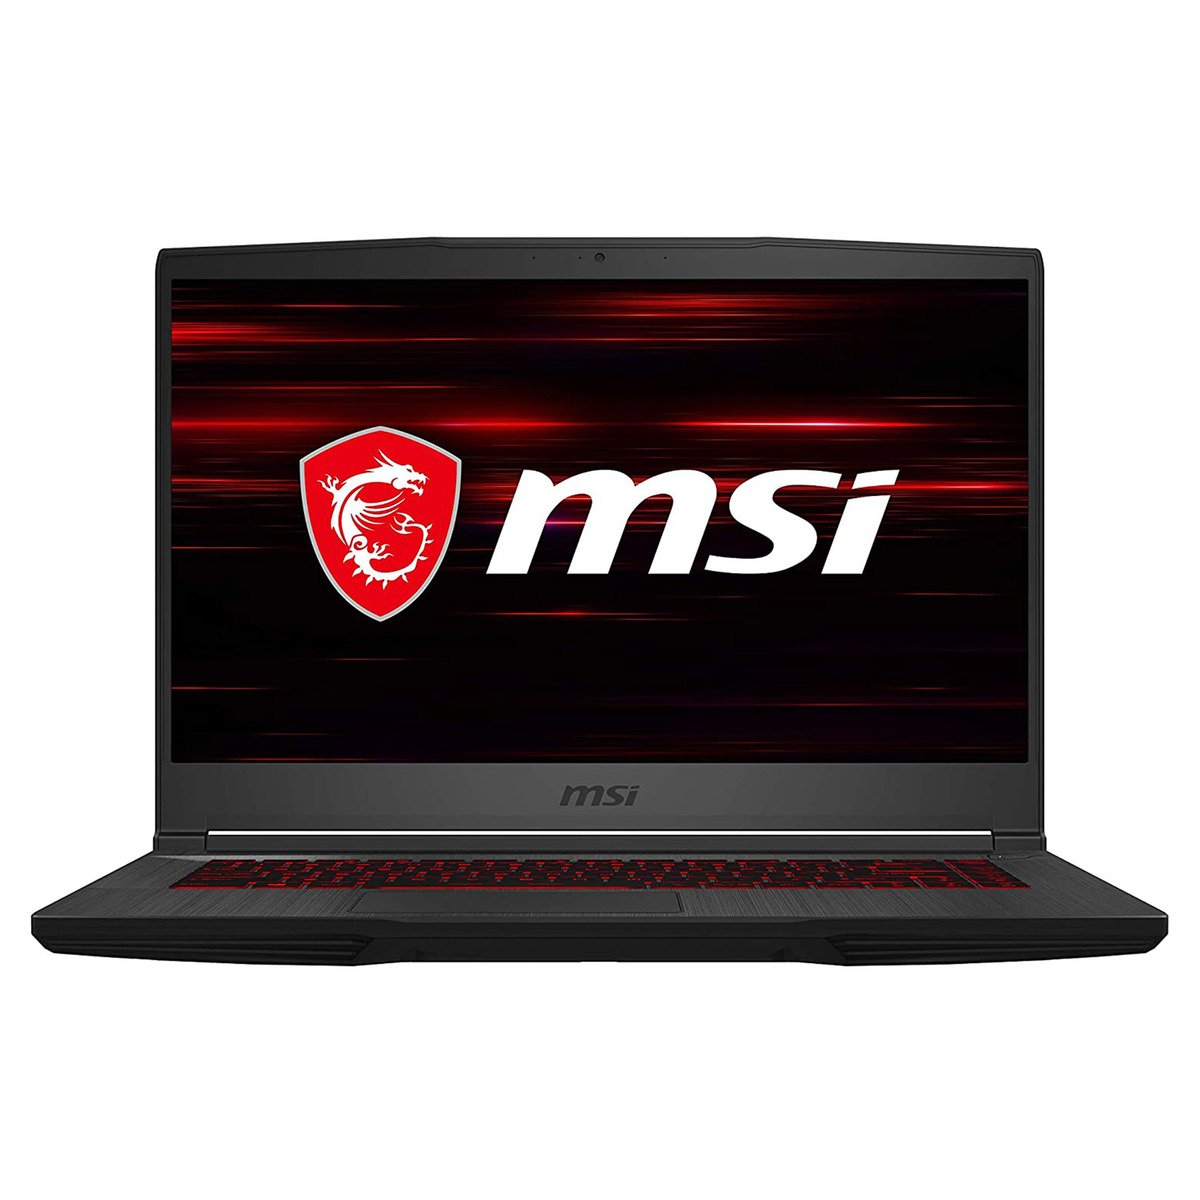 MSI Gaming Notebook 9S7-16R412-689,Intel 10th Gen i7-10750H,15.6" FHD IPS-Level,GeForce GTX1650 GDDR6 4GB,8GB RAM,512GB SSD,Windows 10,Black